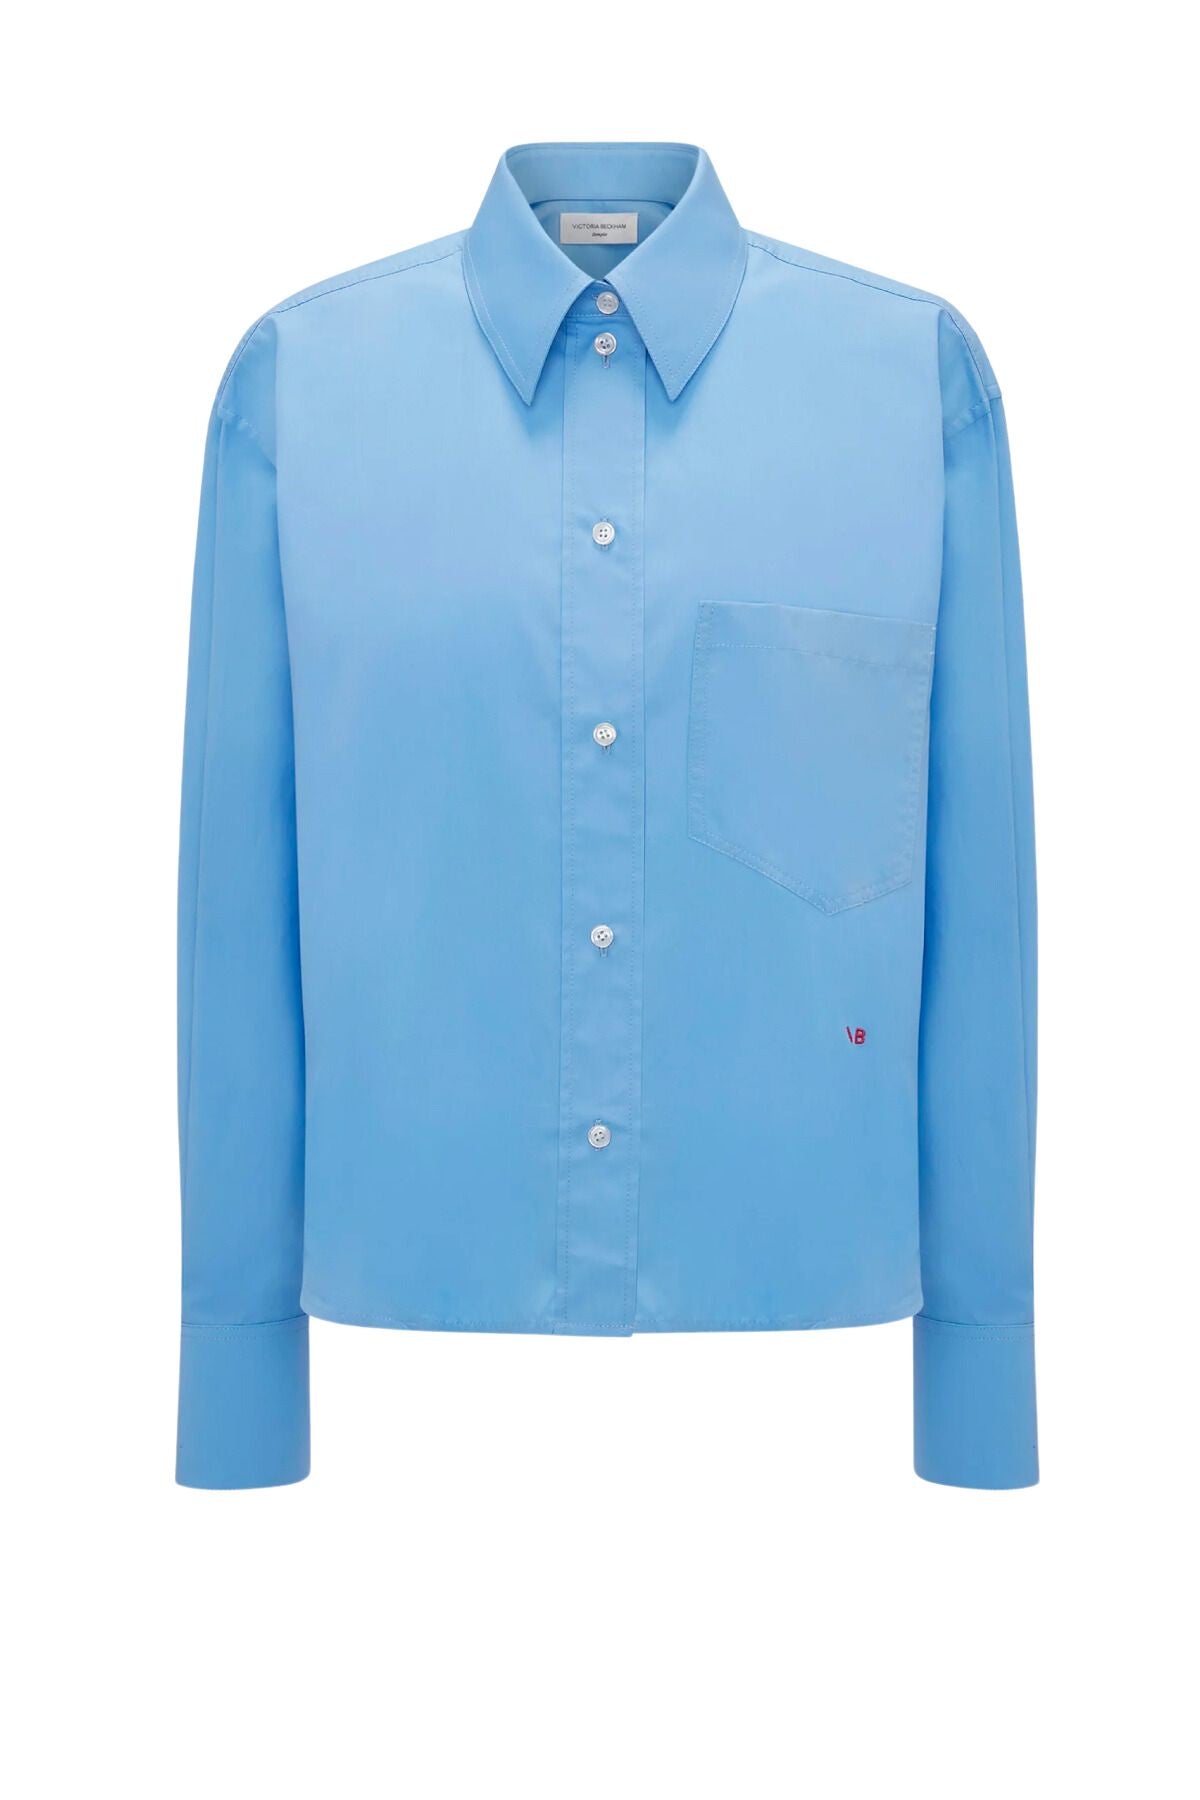 Victoria Beckham Long Sleeve Cropped Shirt - Oxford Blue